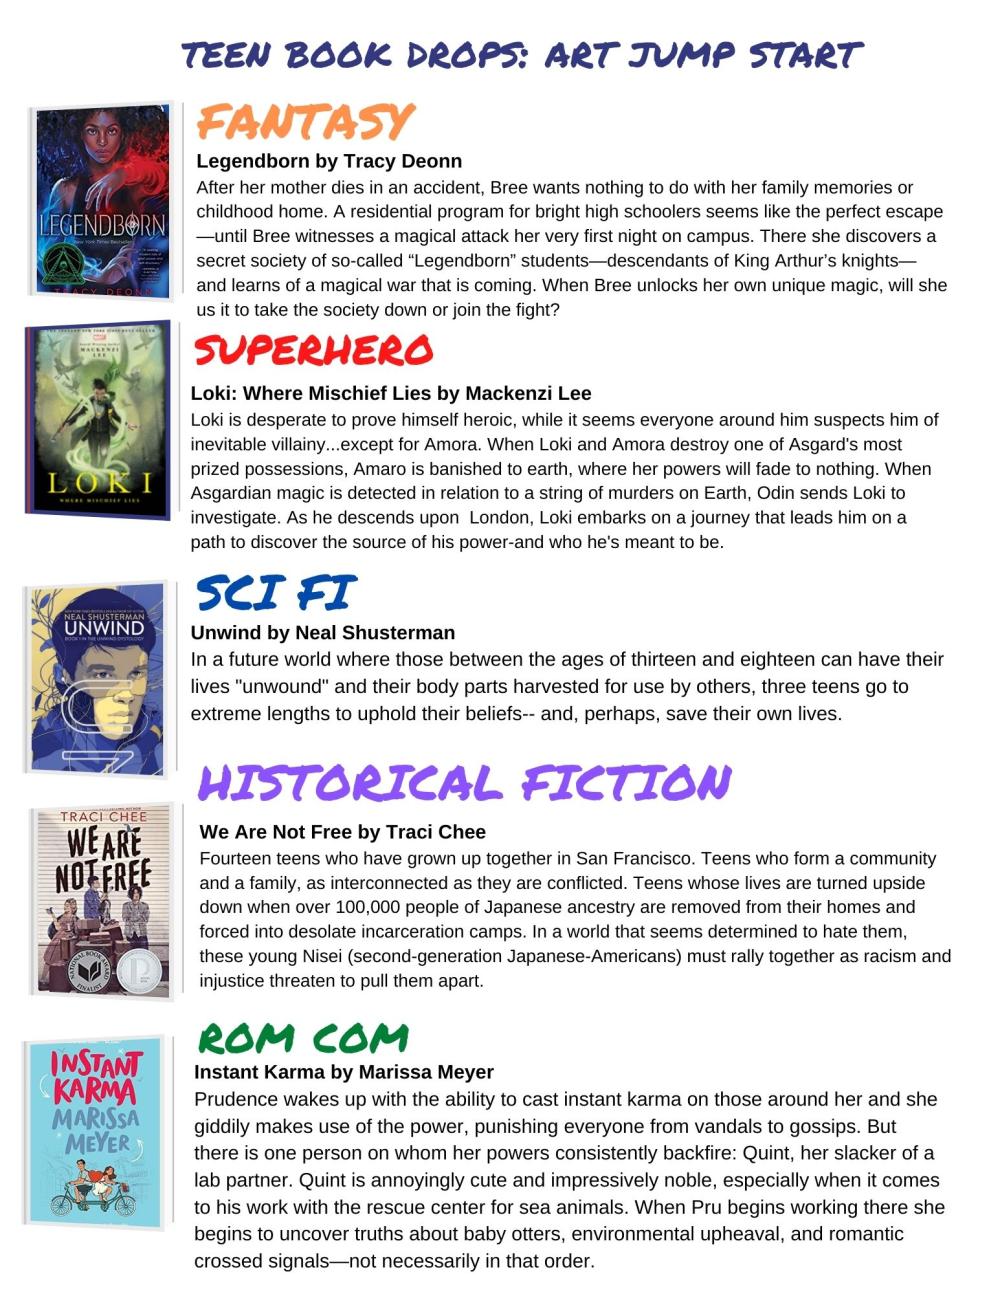 The book choices are Fantasy: Legendborn, Superhero: Loki, SciFi: Unwind, Historical Fiction: We Are Not Free, & Rom-com: Instant Karma.